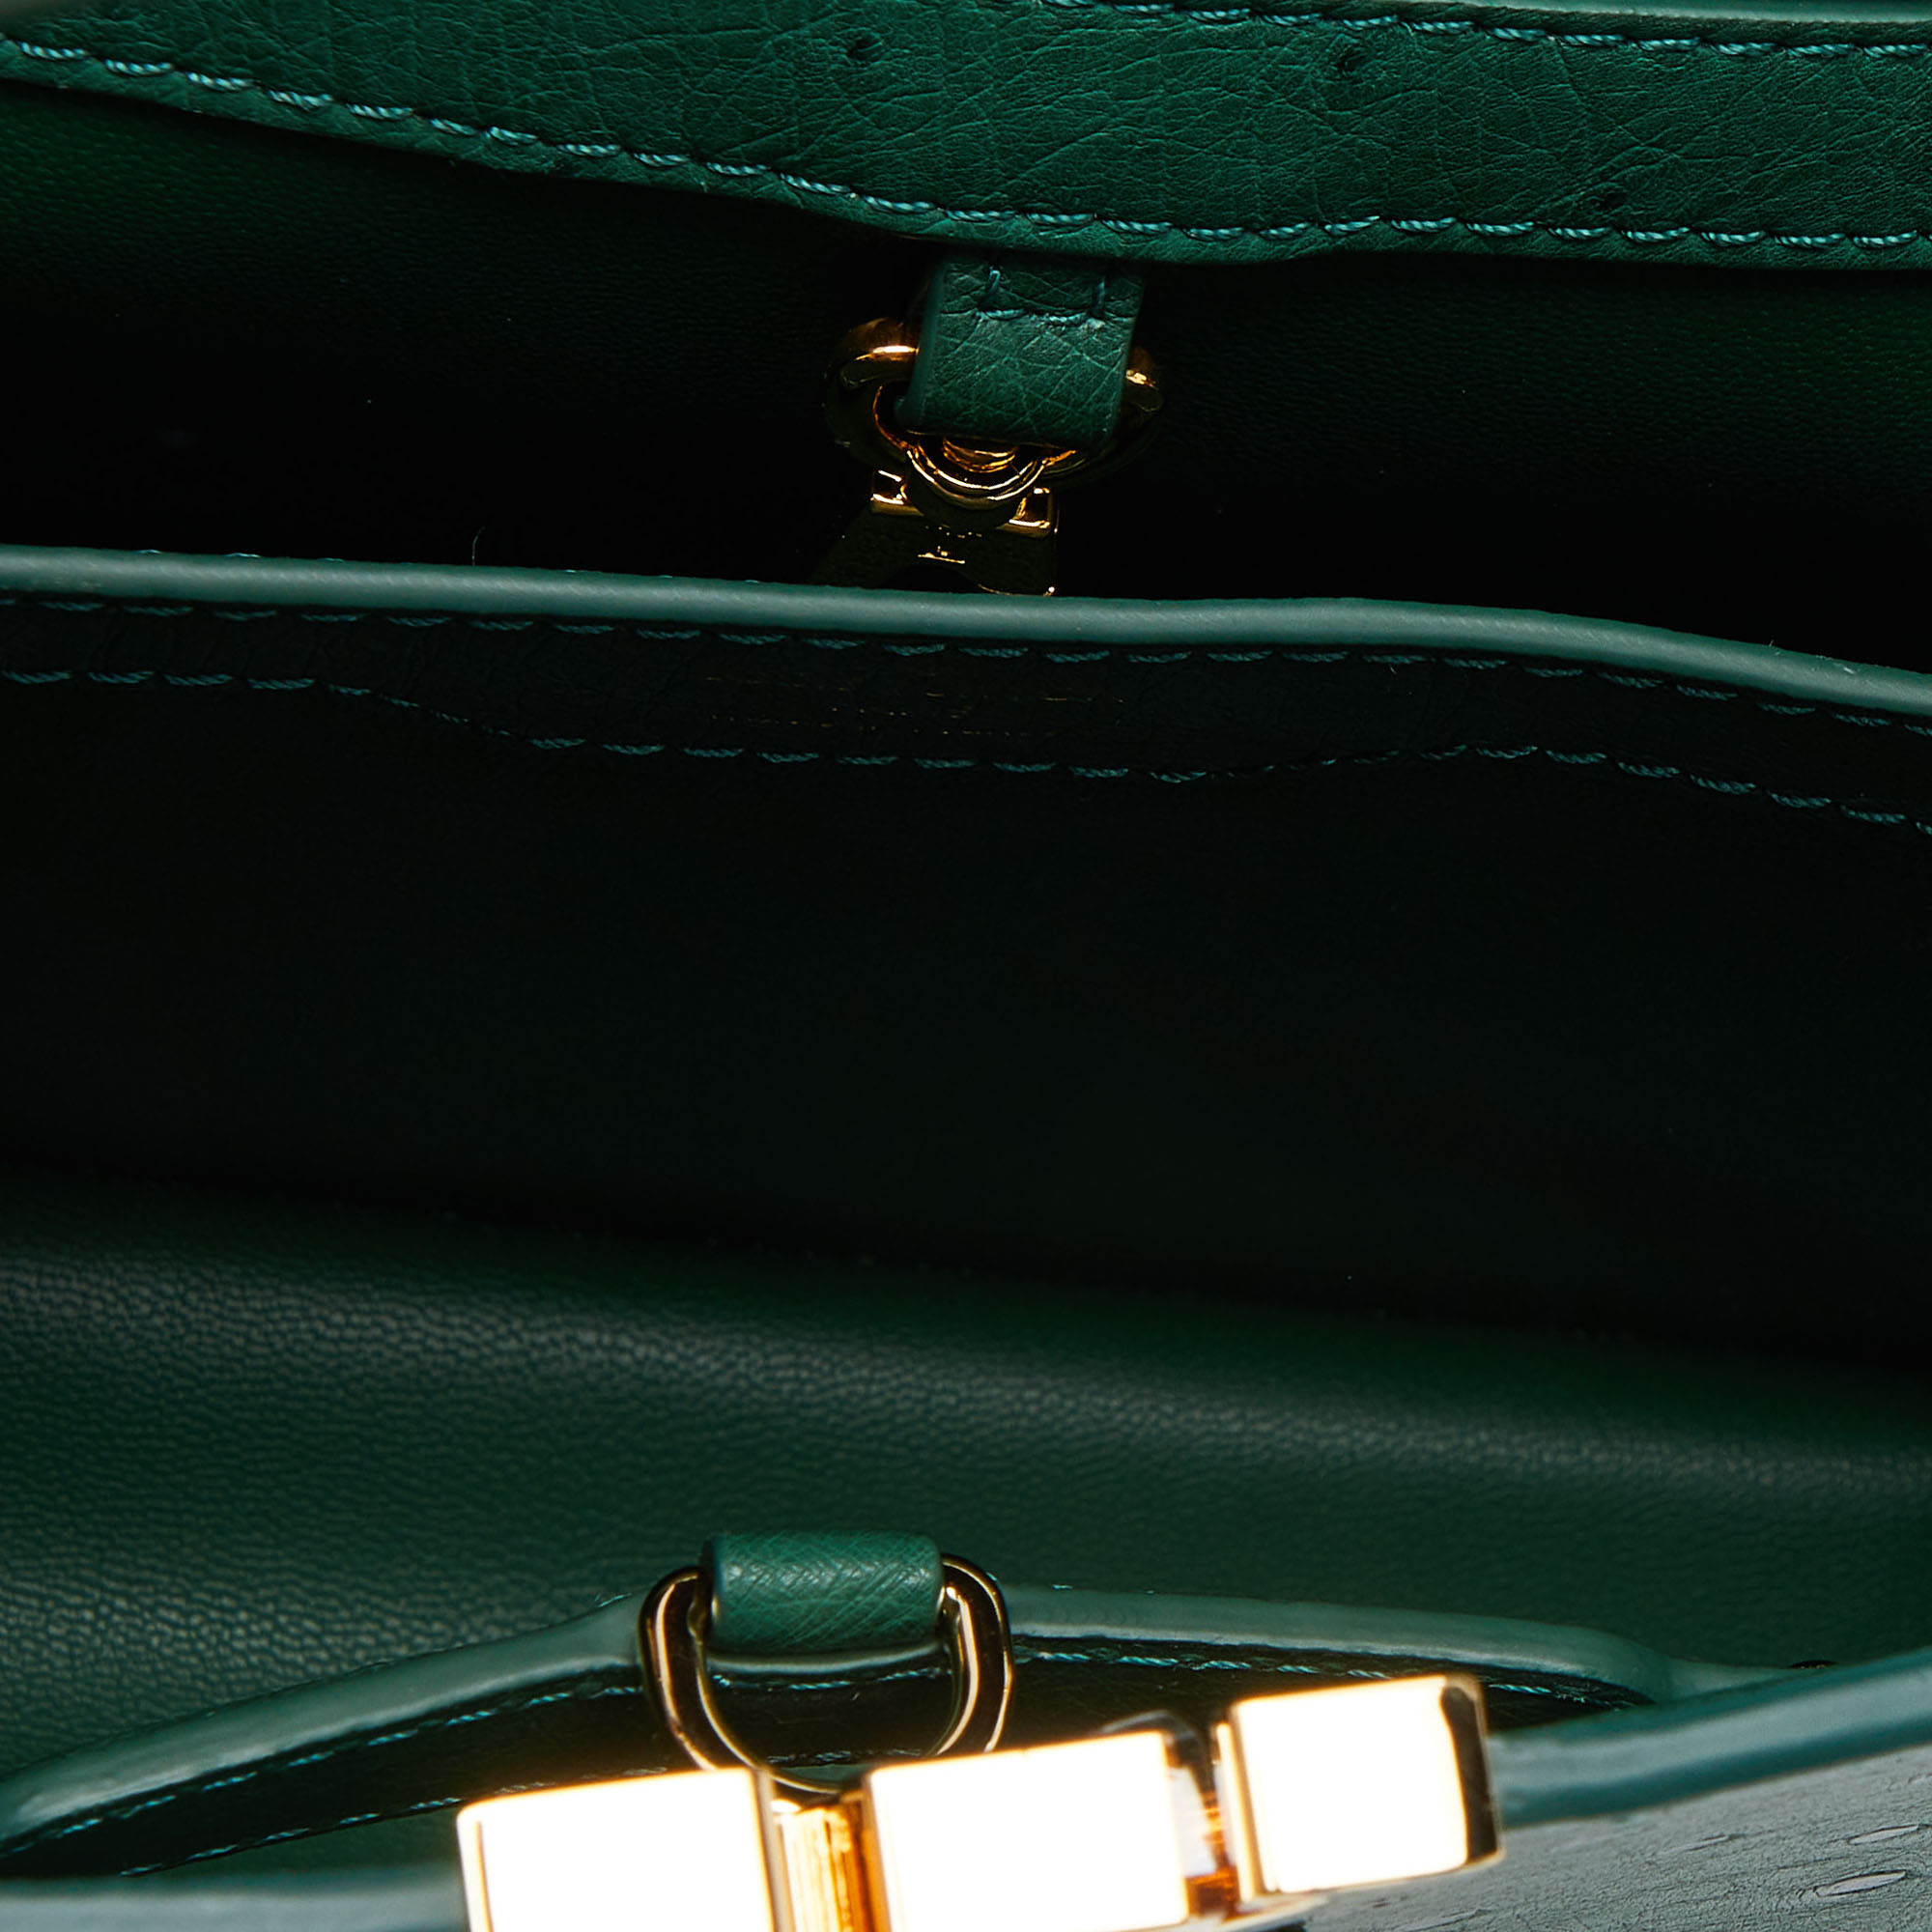 Louis Vuitton Green Ostrich Leather Capucines BB Bag